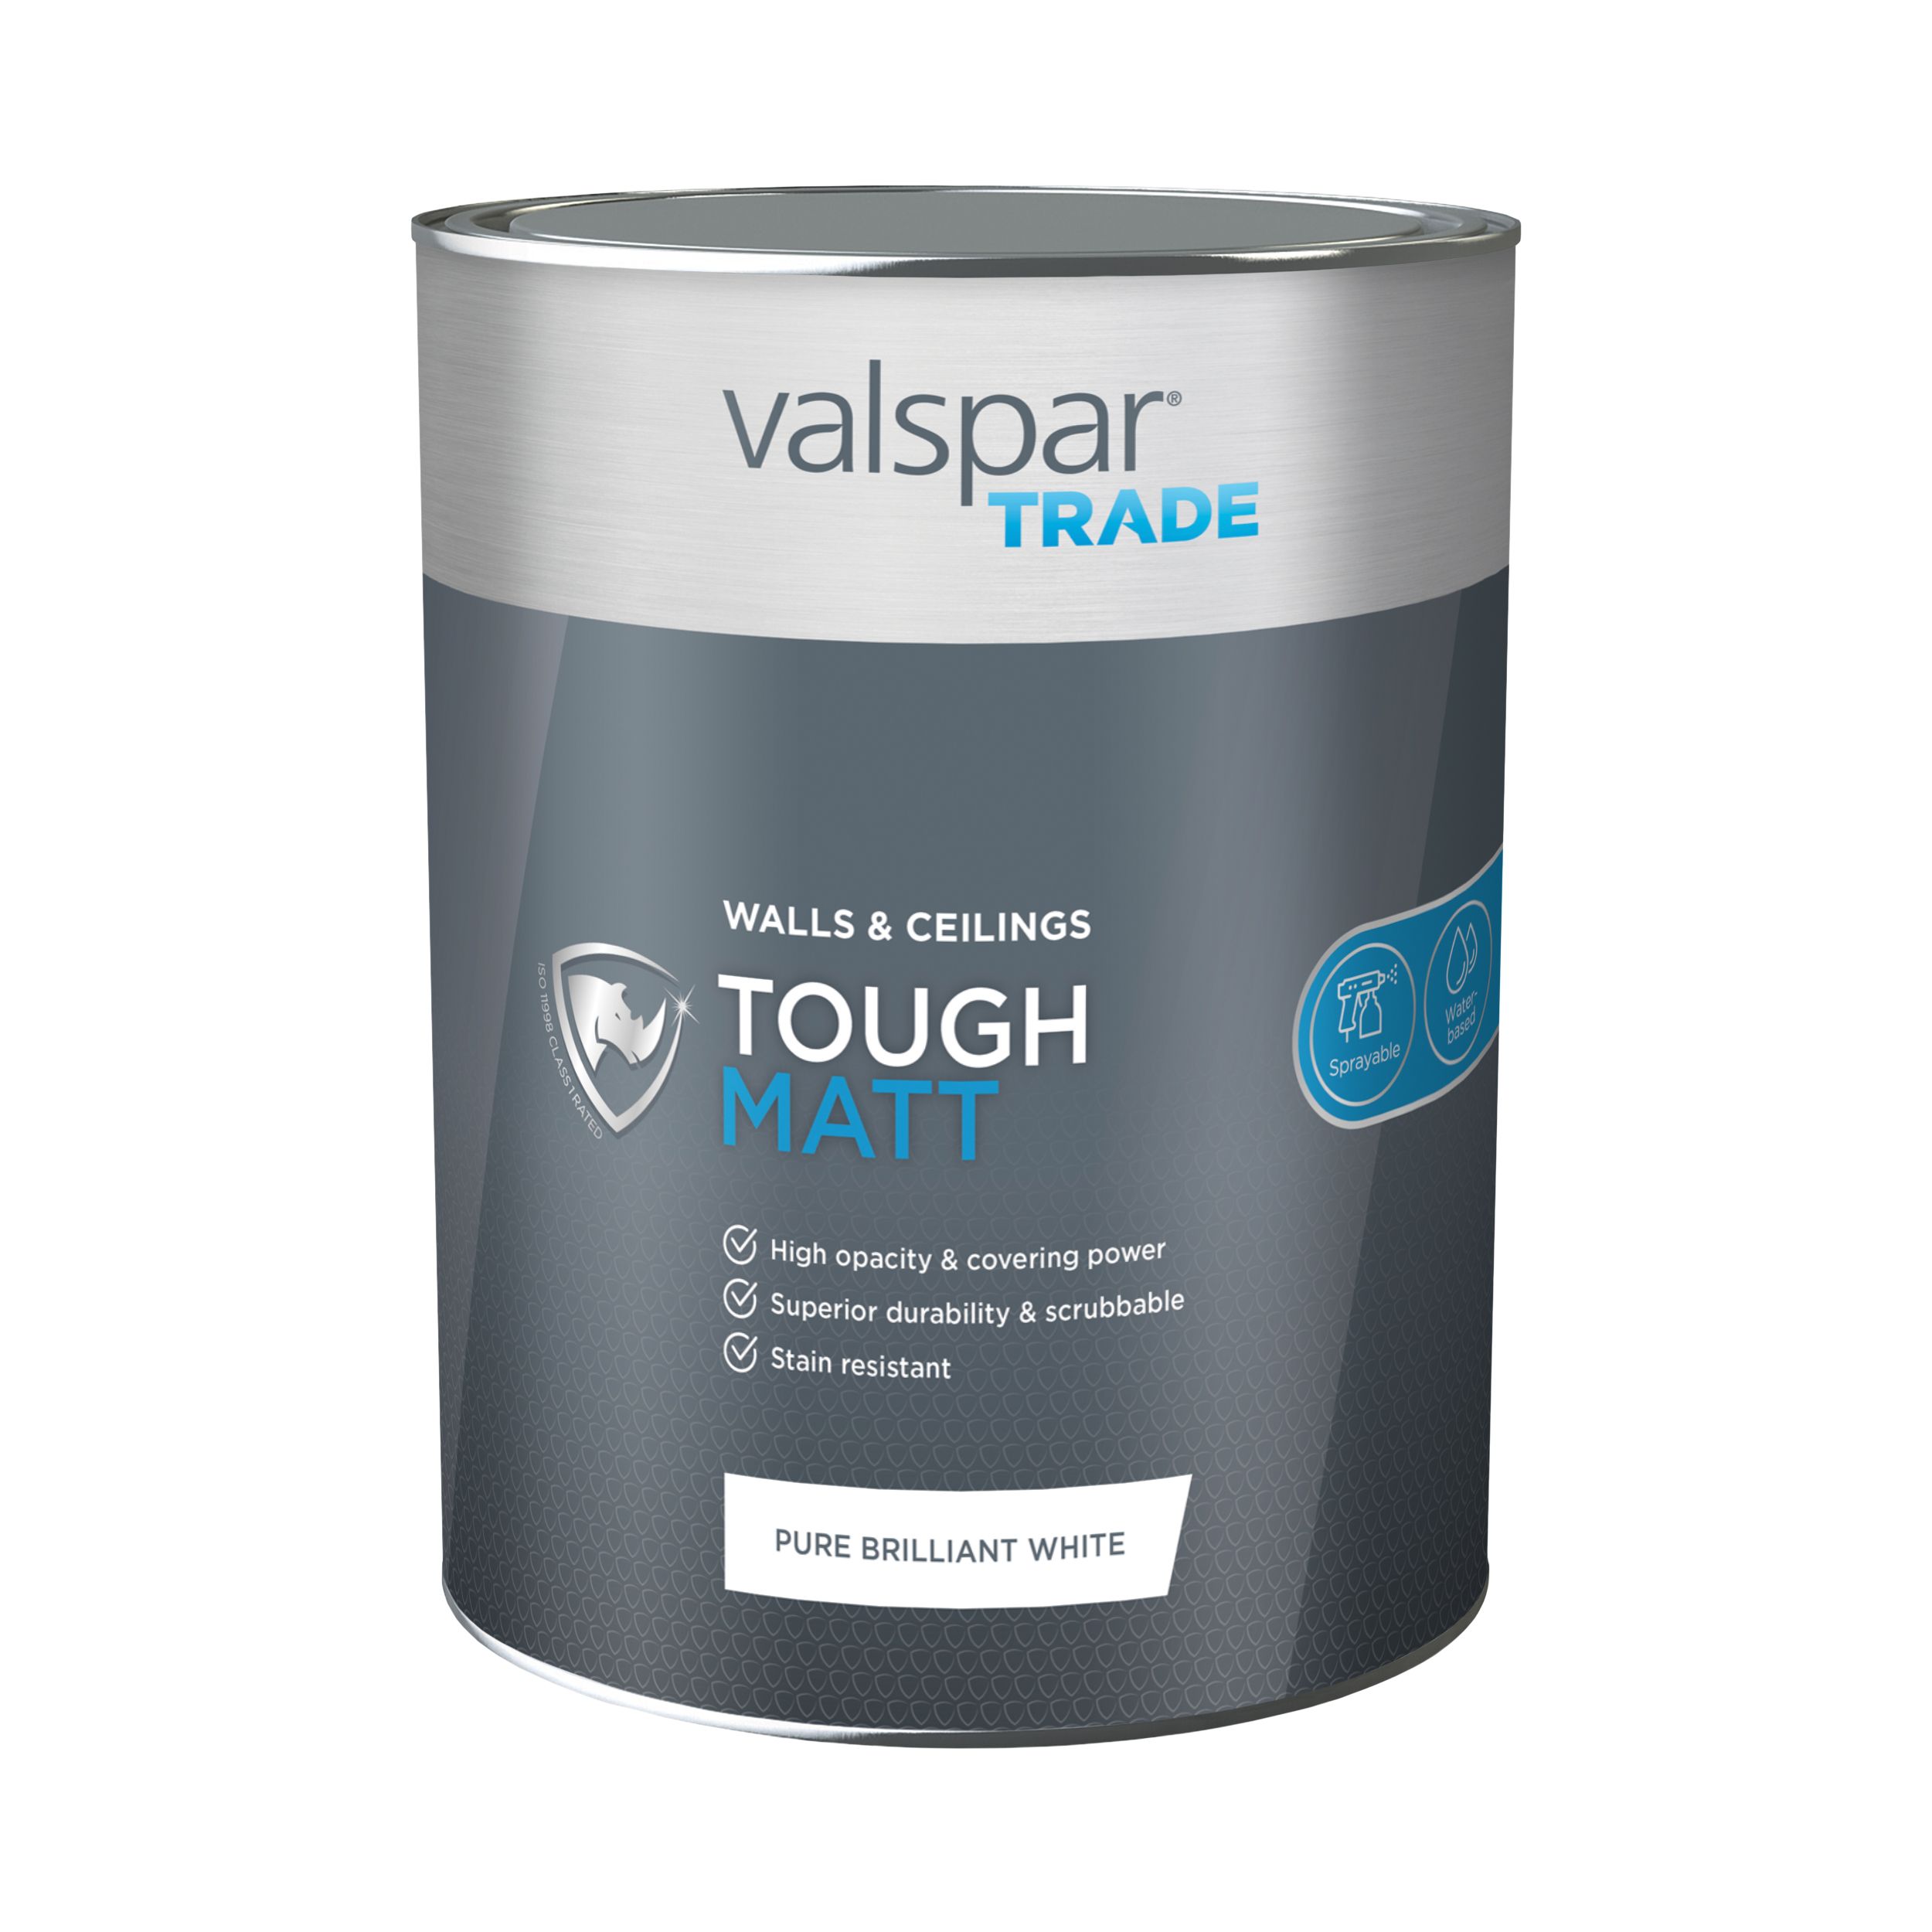 Valspar Trade Tough Pure Brilliant White Matt Emulsion paint, 5L